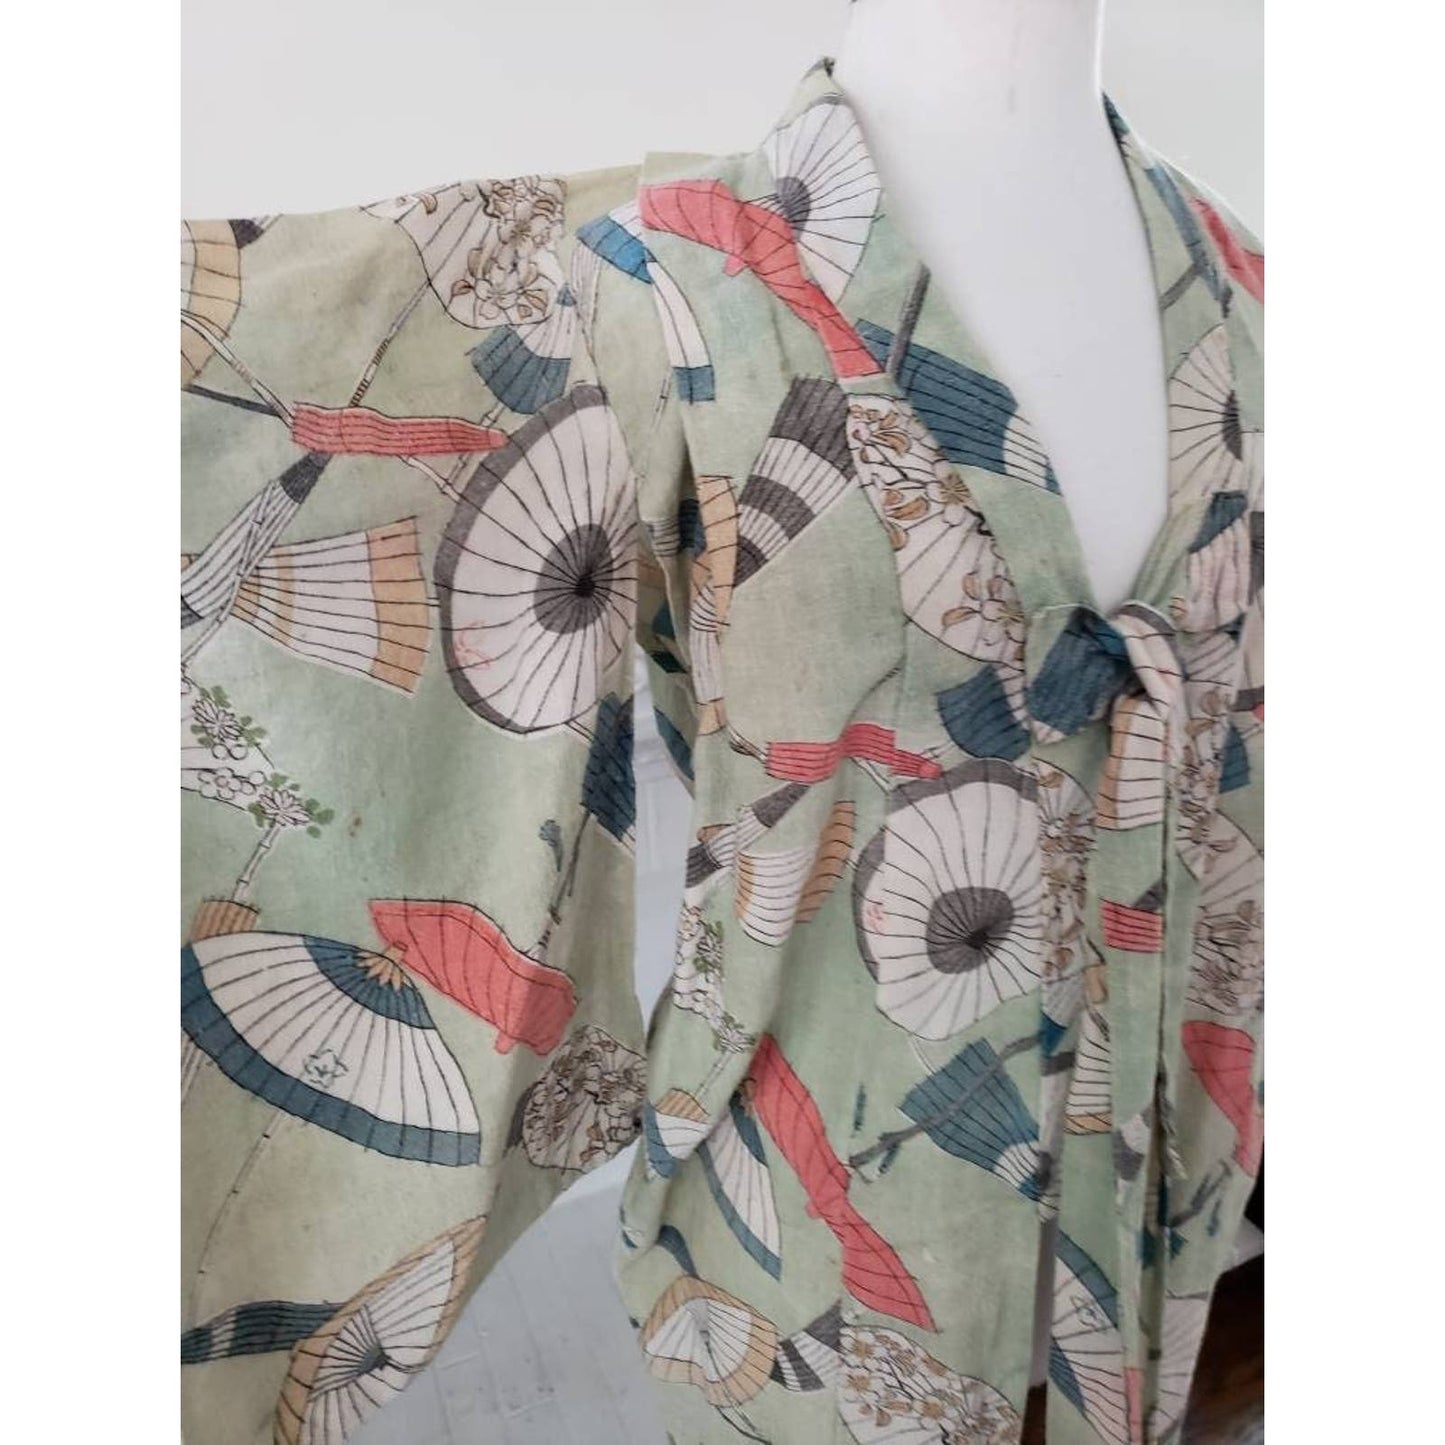 Vintage Kimono Haori Jacket Cotton Linen Umbrella Print